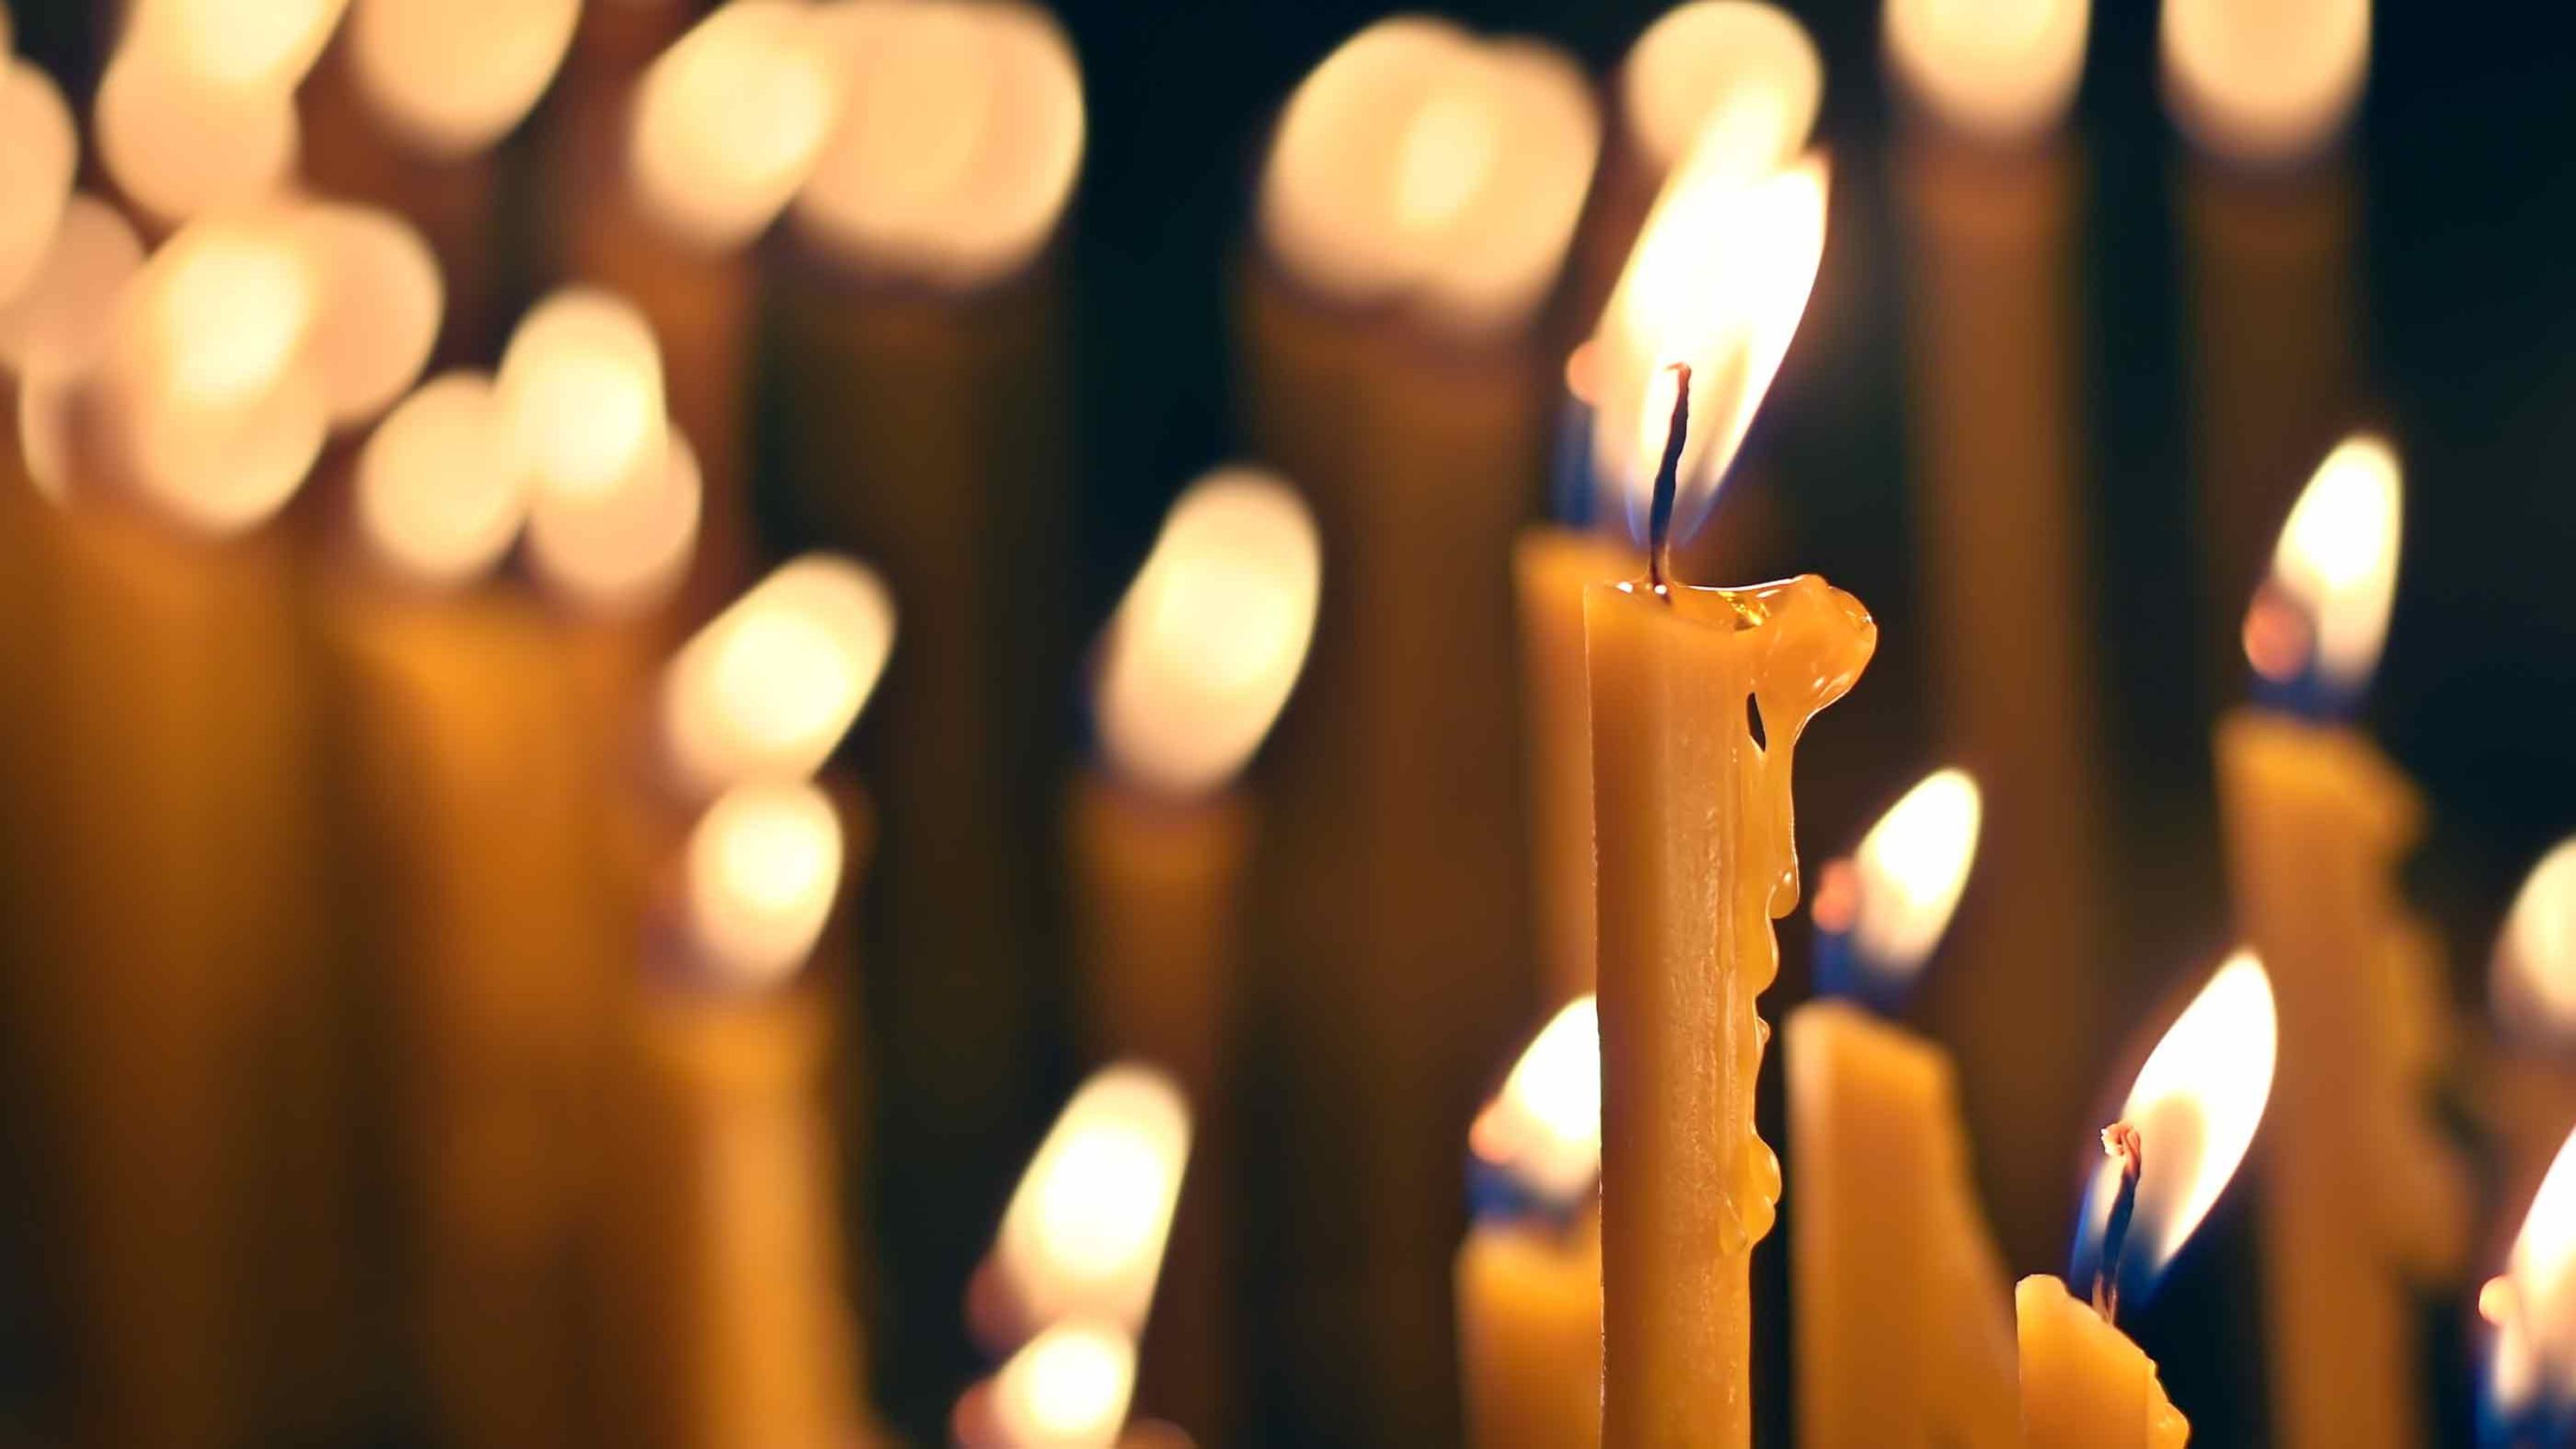 Lit candles — memorial image